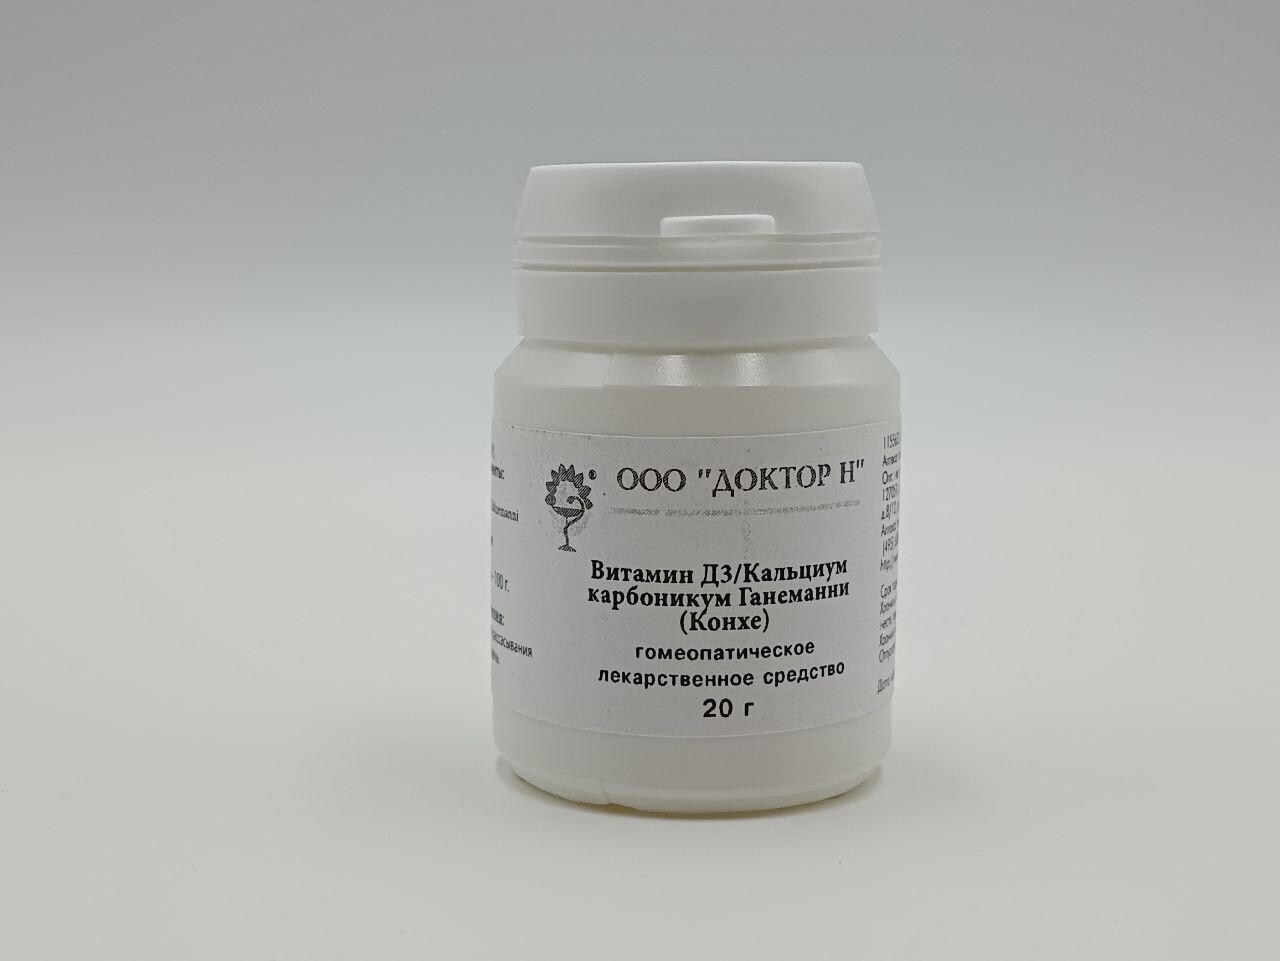 Витамин Д3/ Кальциум карбоникум Ганеманни